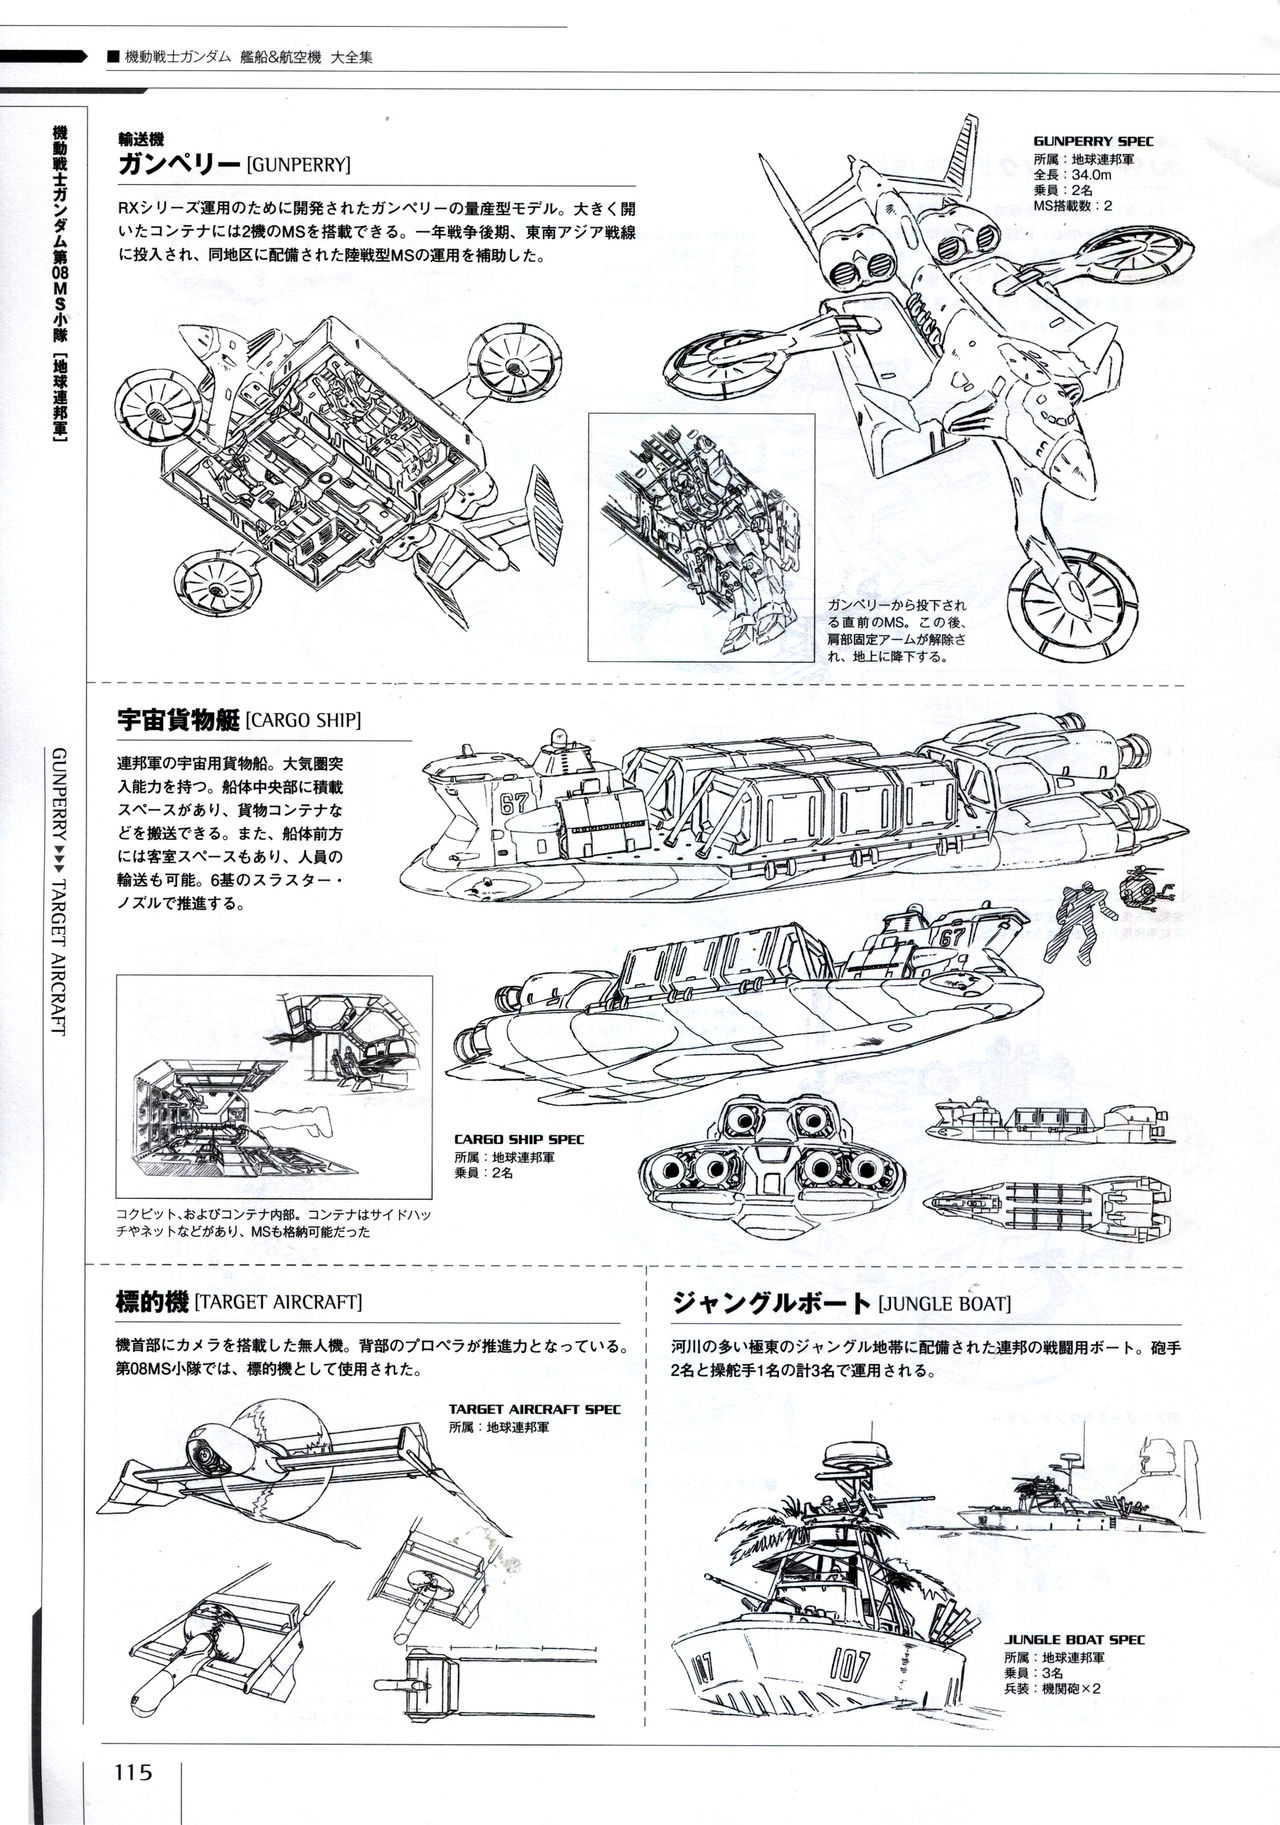 Mobile Suit Gundam - Ship & Aerospace Plane Encyclopedia - Revised Edition 120